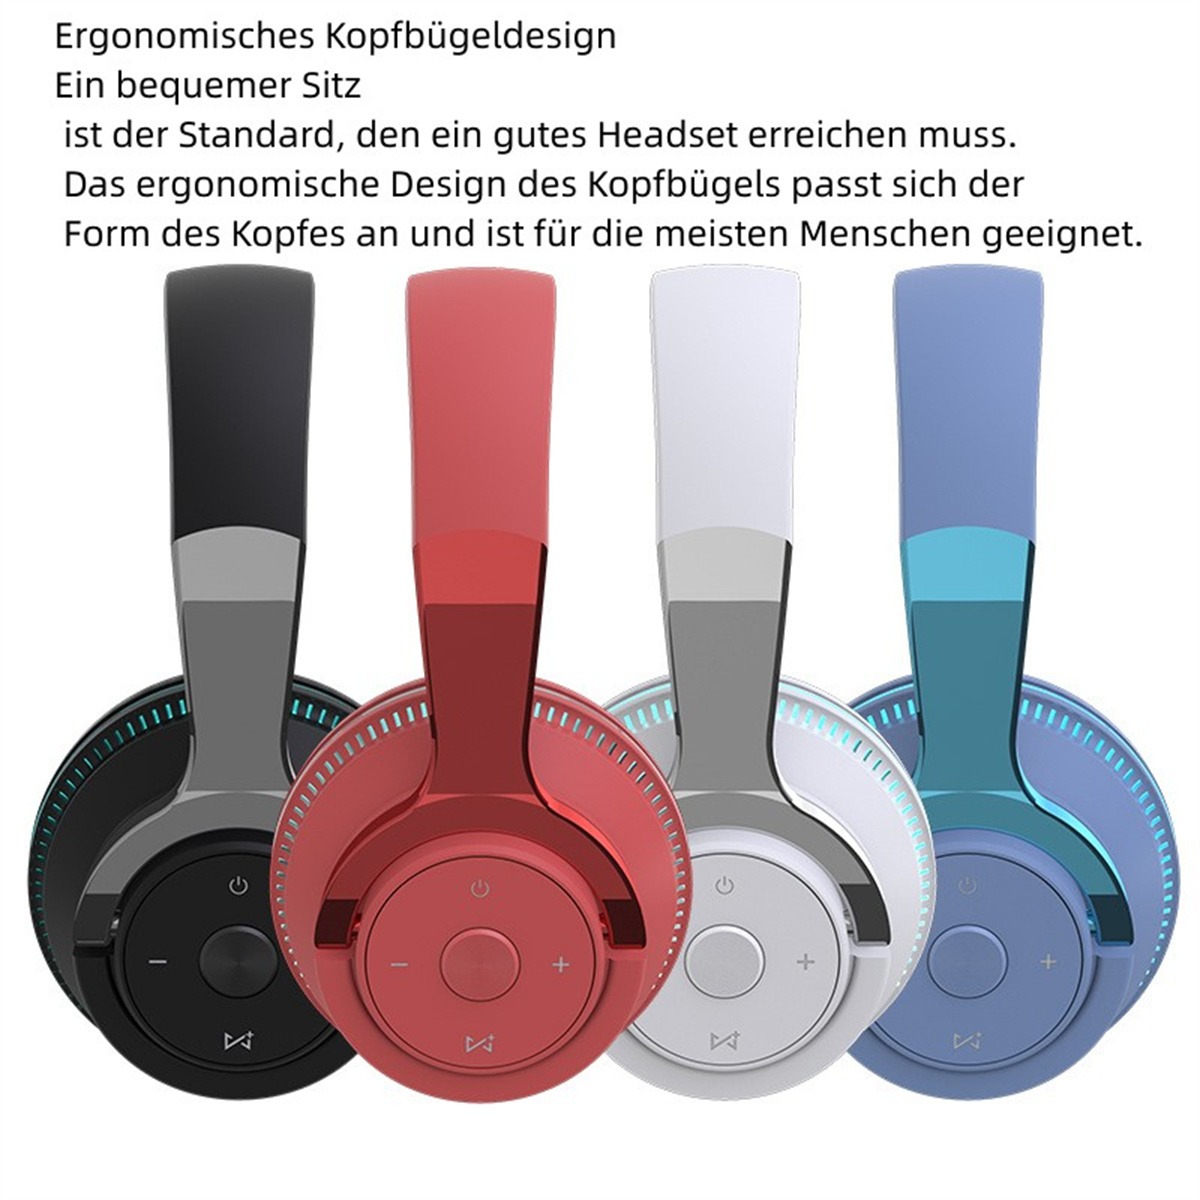 SYNTEK Bluetooth-Headset Weißes Stirnband Kabelloses Bass-Klapp-Headset, Bluetooth Kopfhörer Weiß Licht emittierendes Over-ear